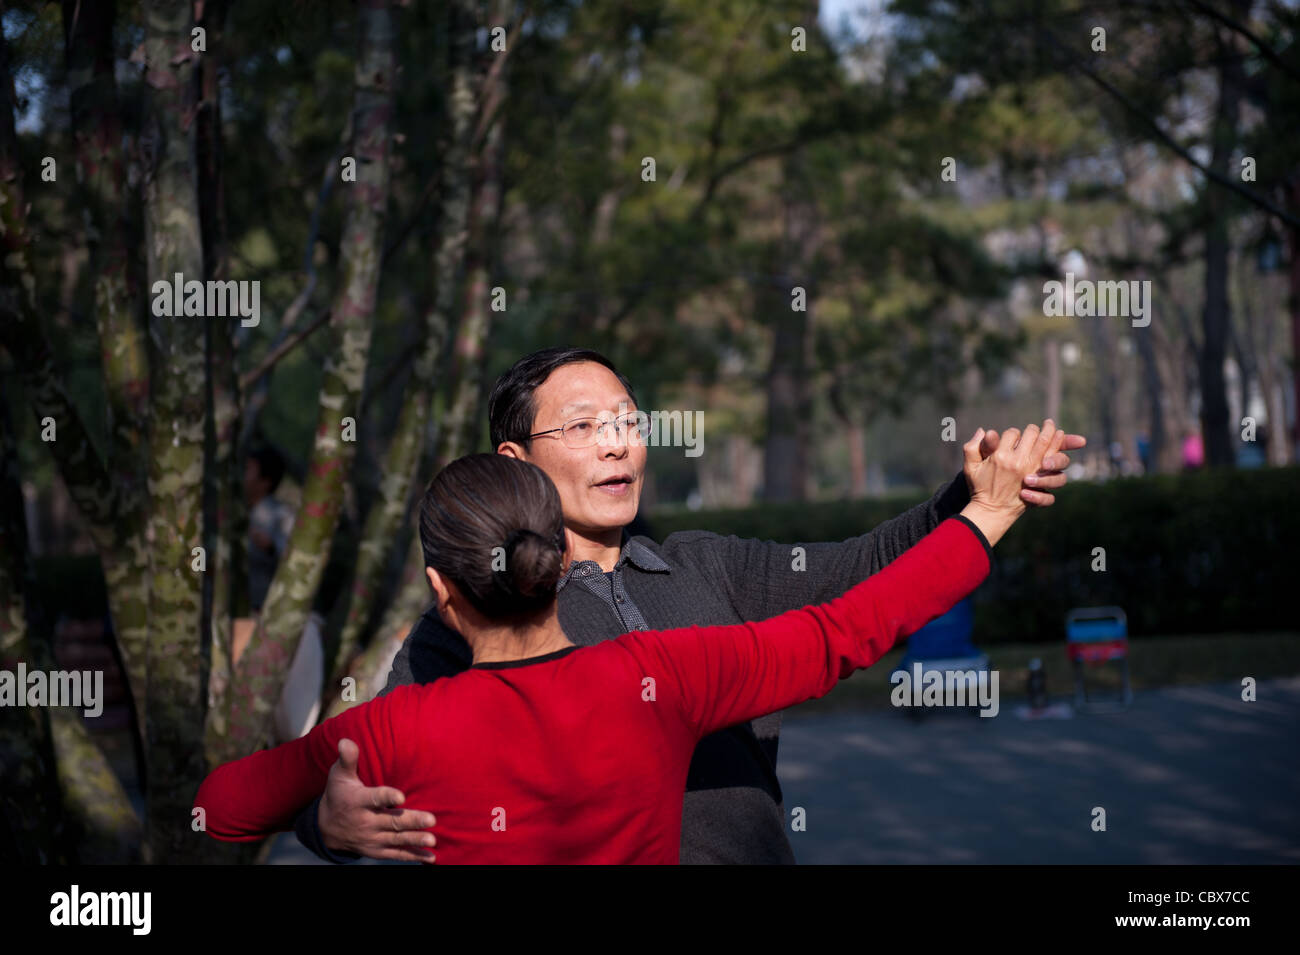 Beijing, Ritan Park. Couple dancing the tango. Stock Photo